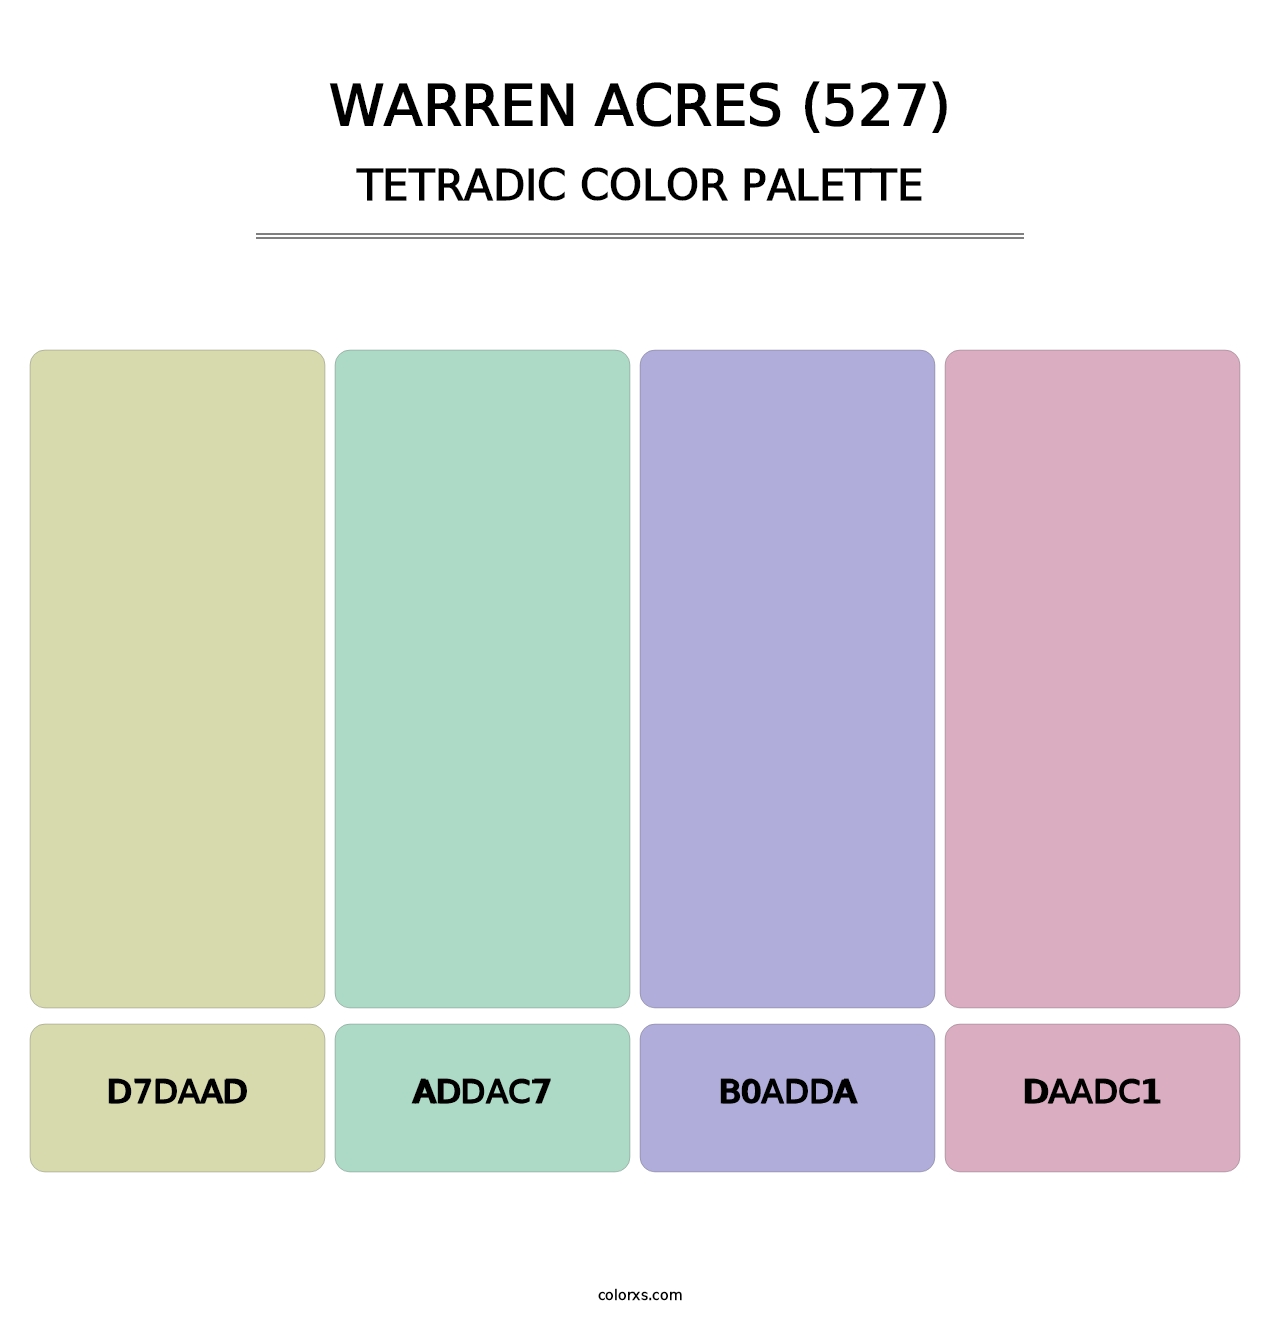 Warren Acres (527) - Tetradic Color Palette